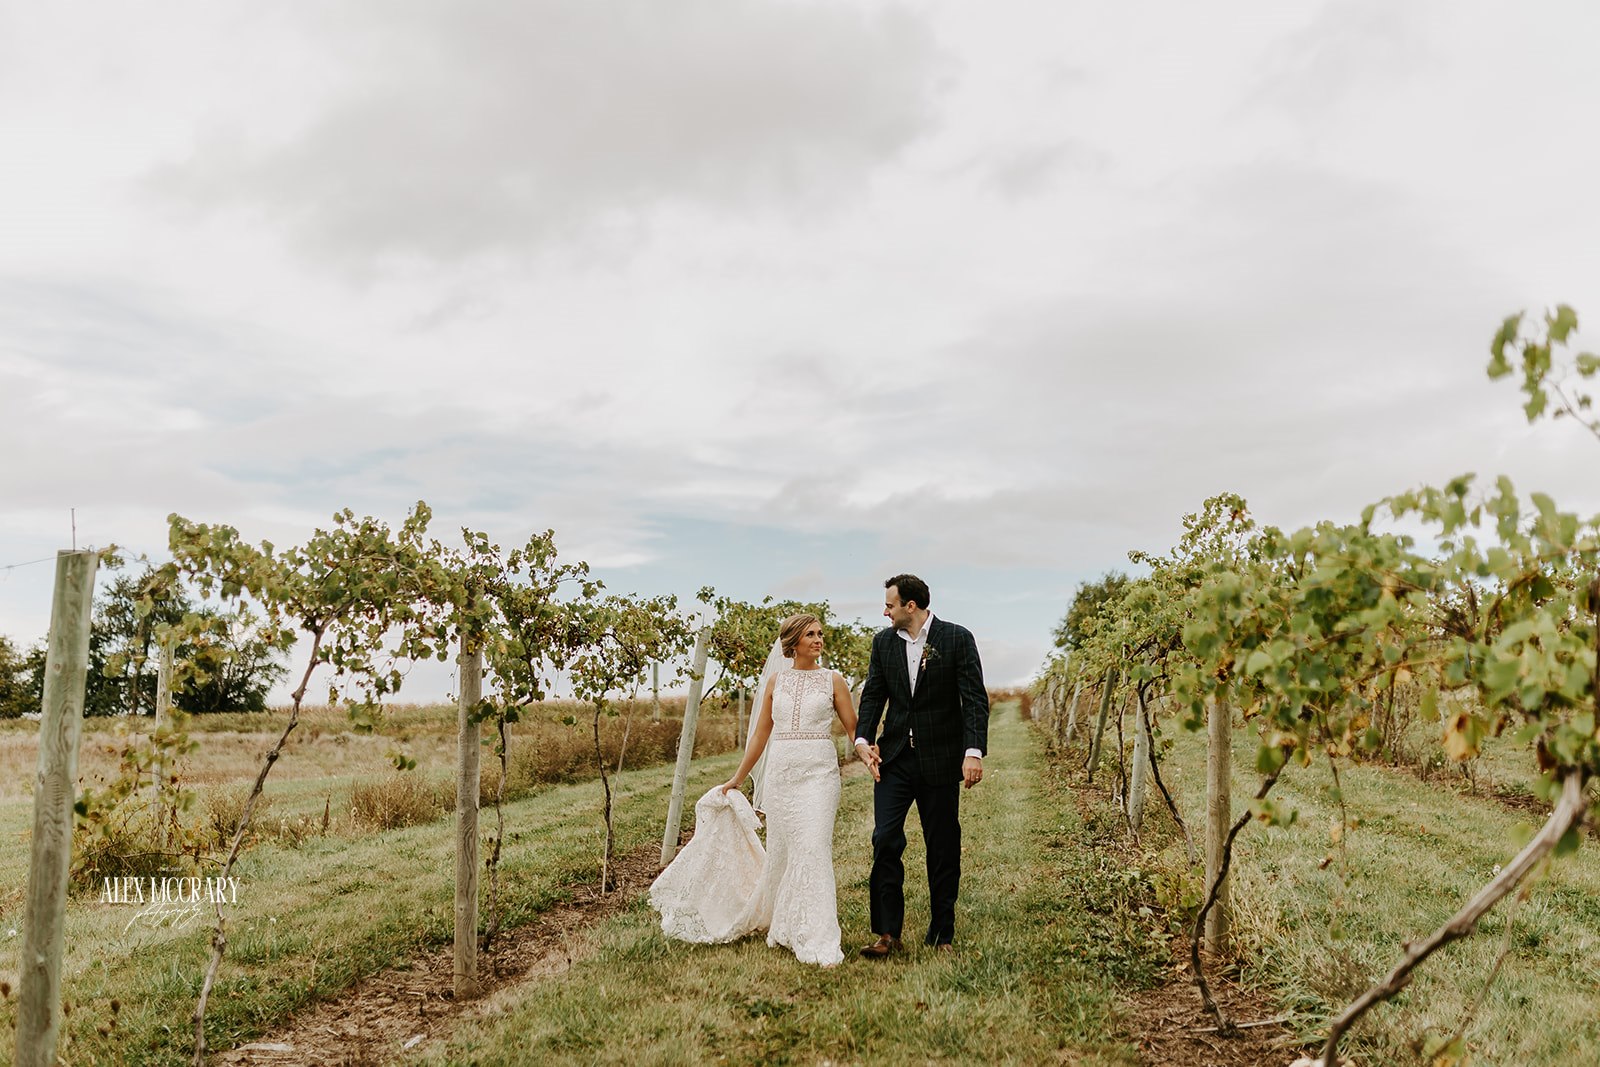 bride and groom walking through winery vineyard on wedding day